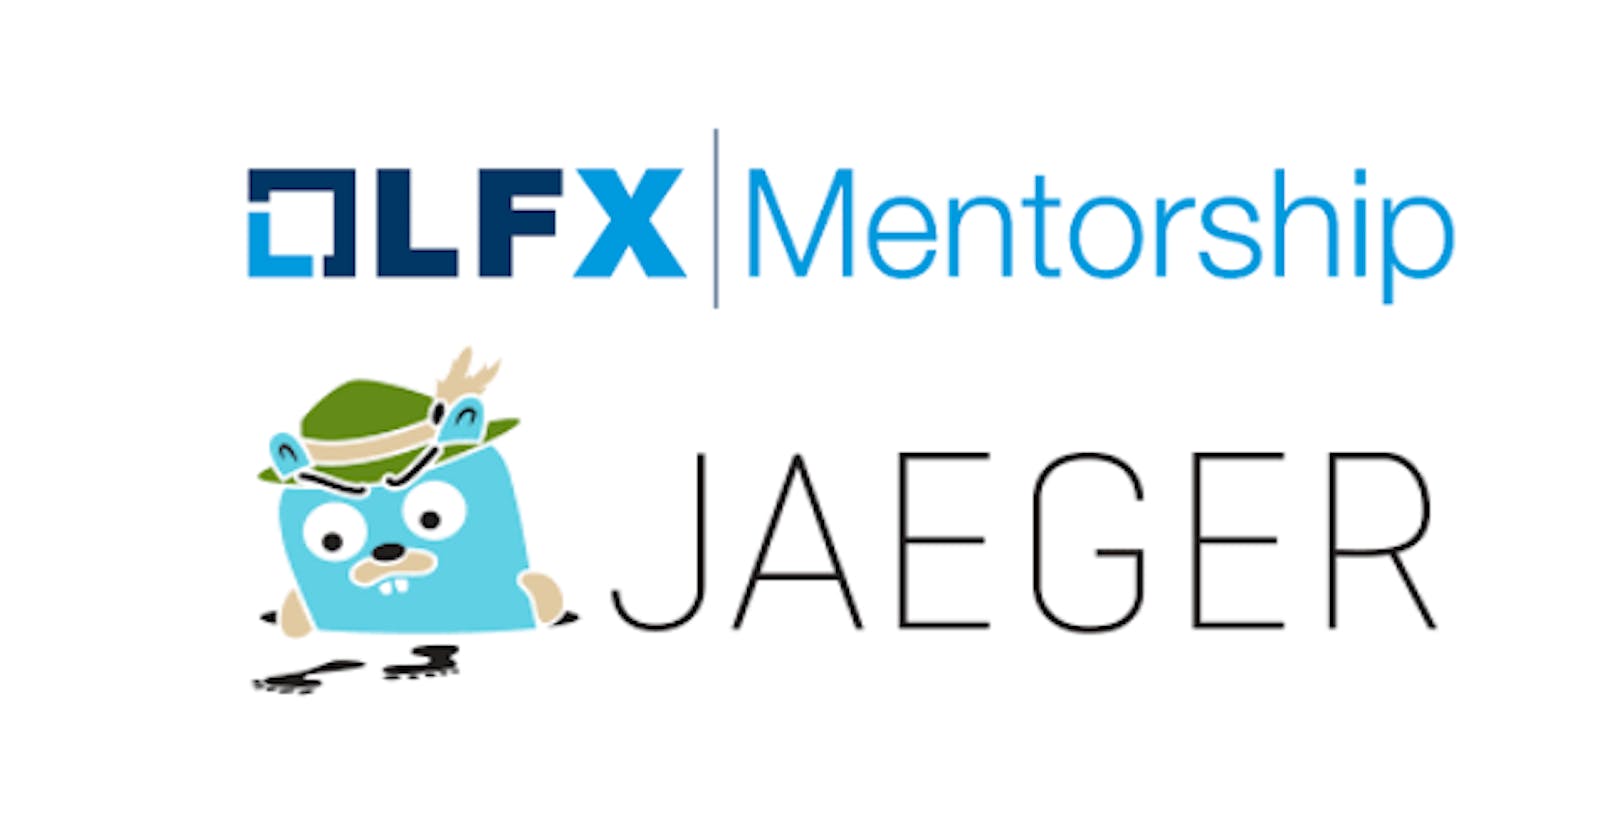 My LFX Mentorship Week 4 Experience with Jaeger